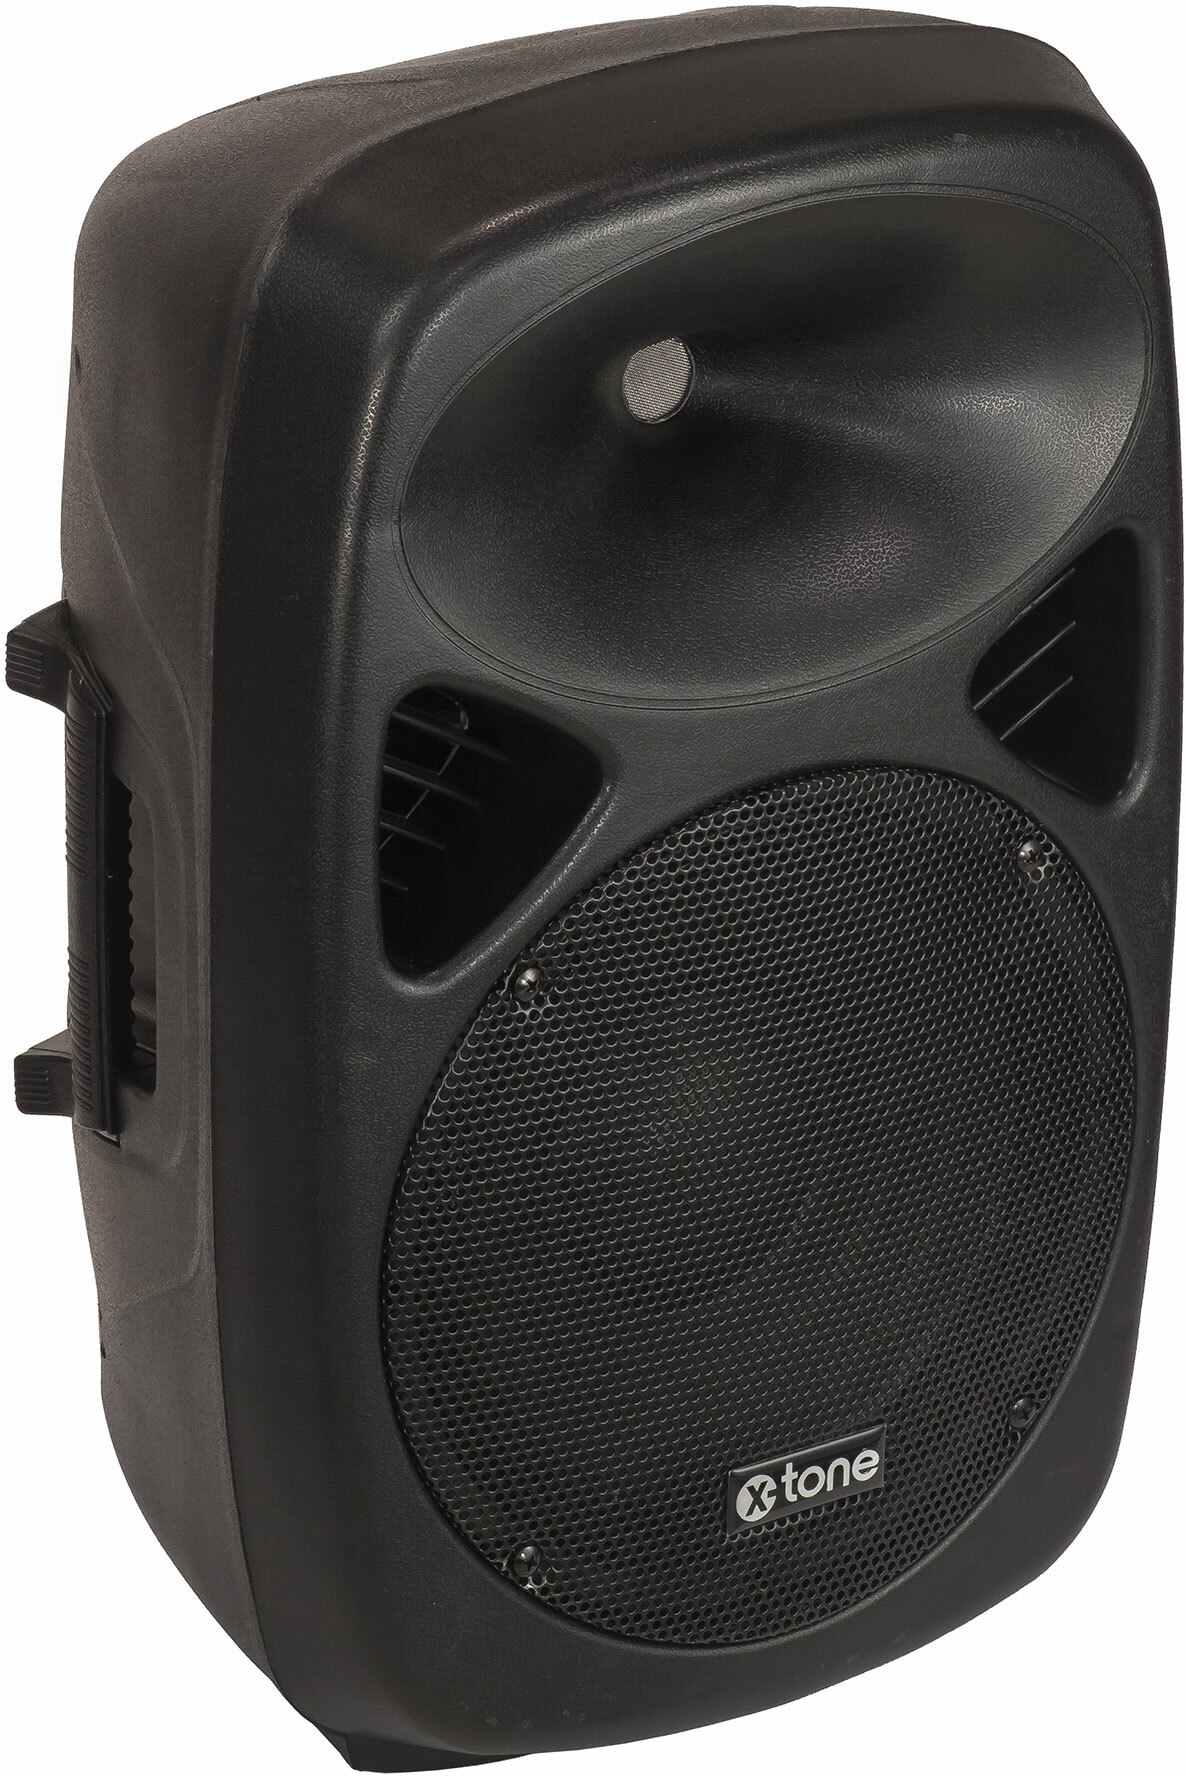 X-tone Sma-10 - Active full-range speaker - Main picture